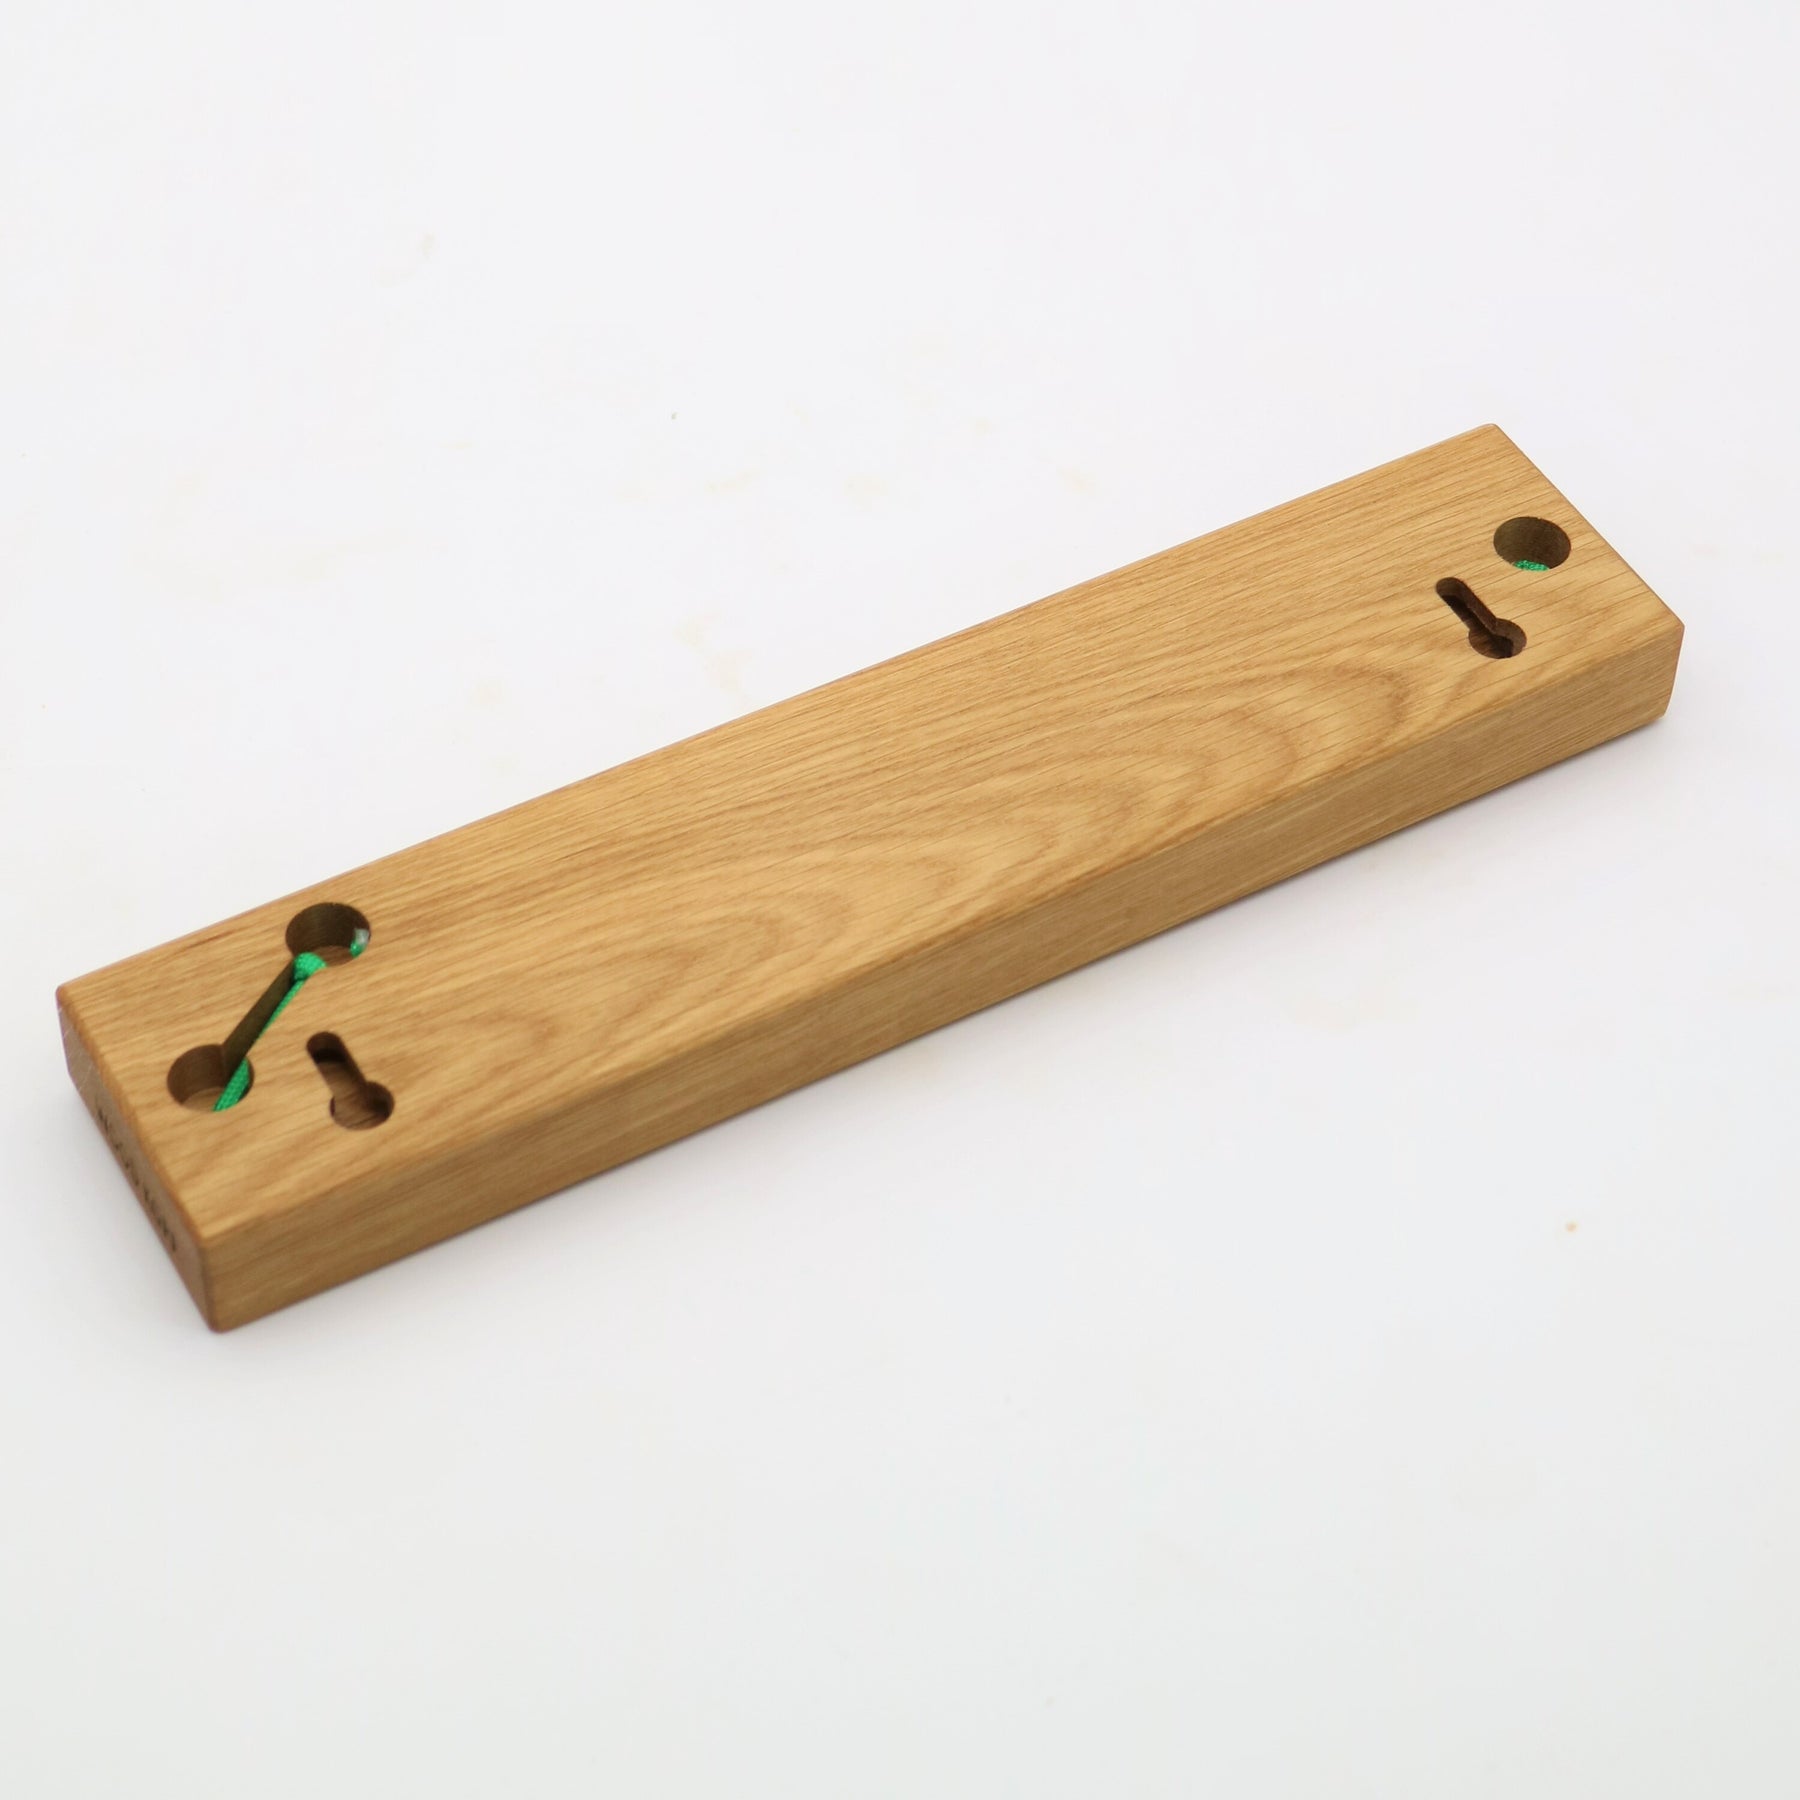 Brillenhalter Lunettes Holz-27599 - España